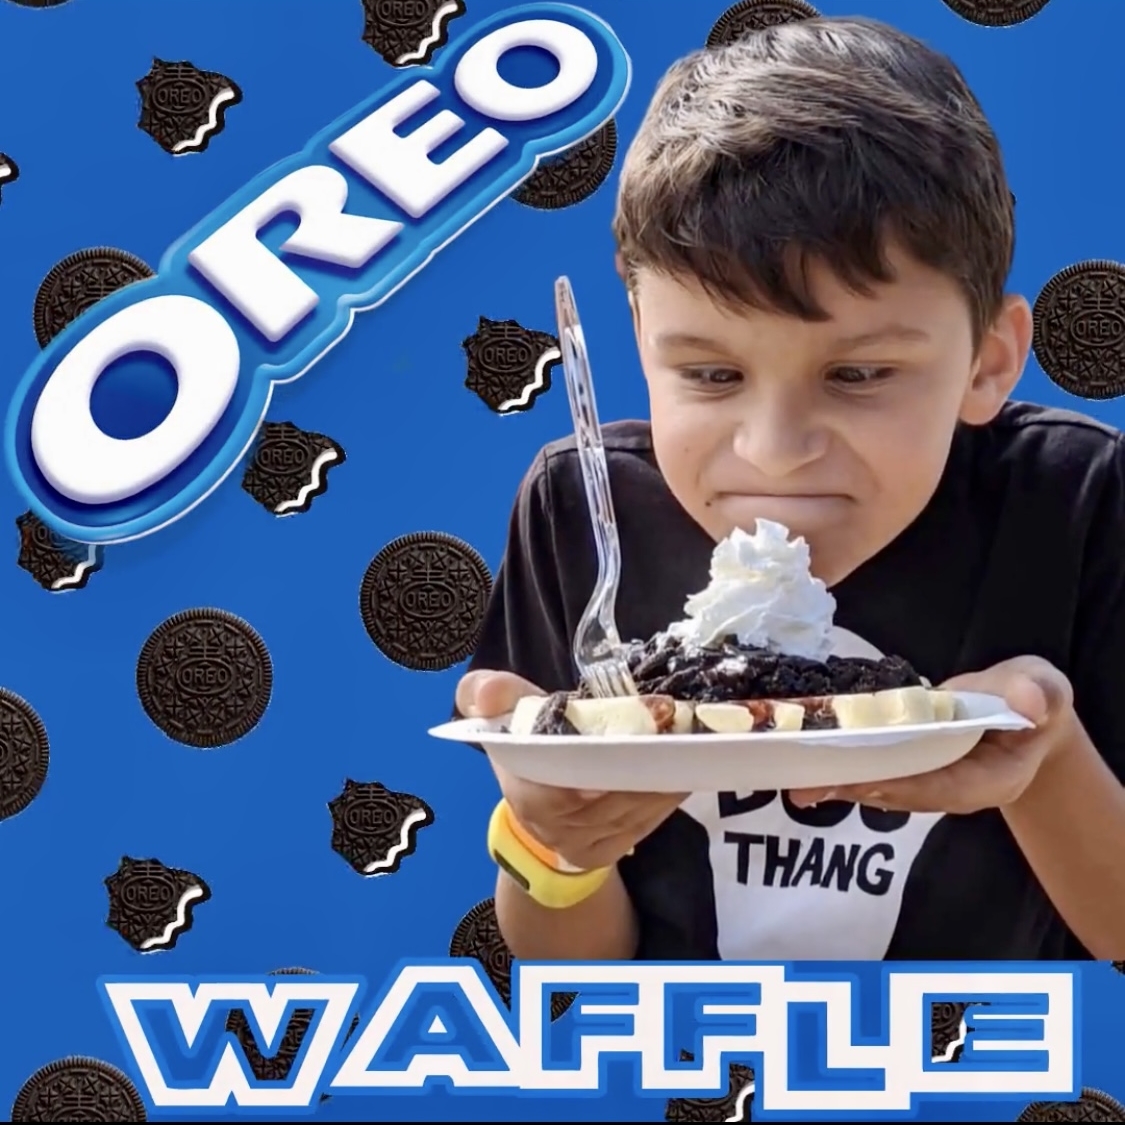 Oreo & Hershey's Waffle